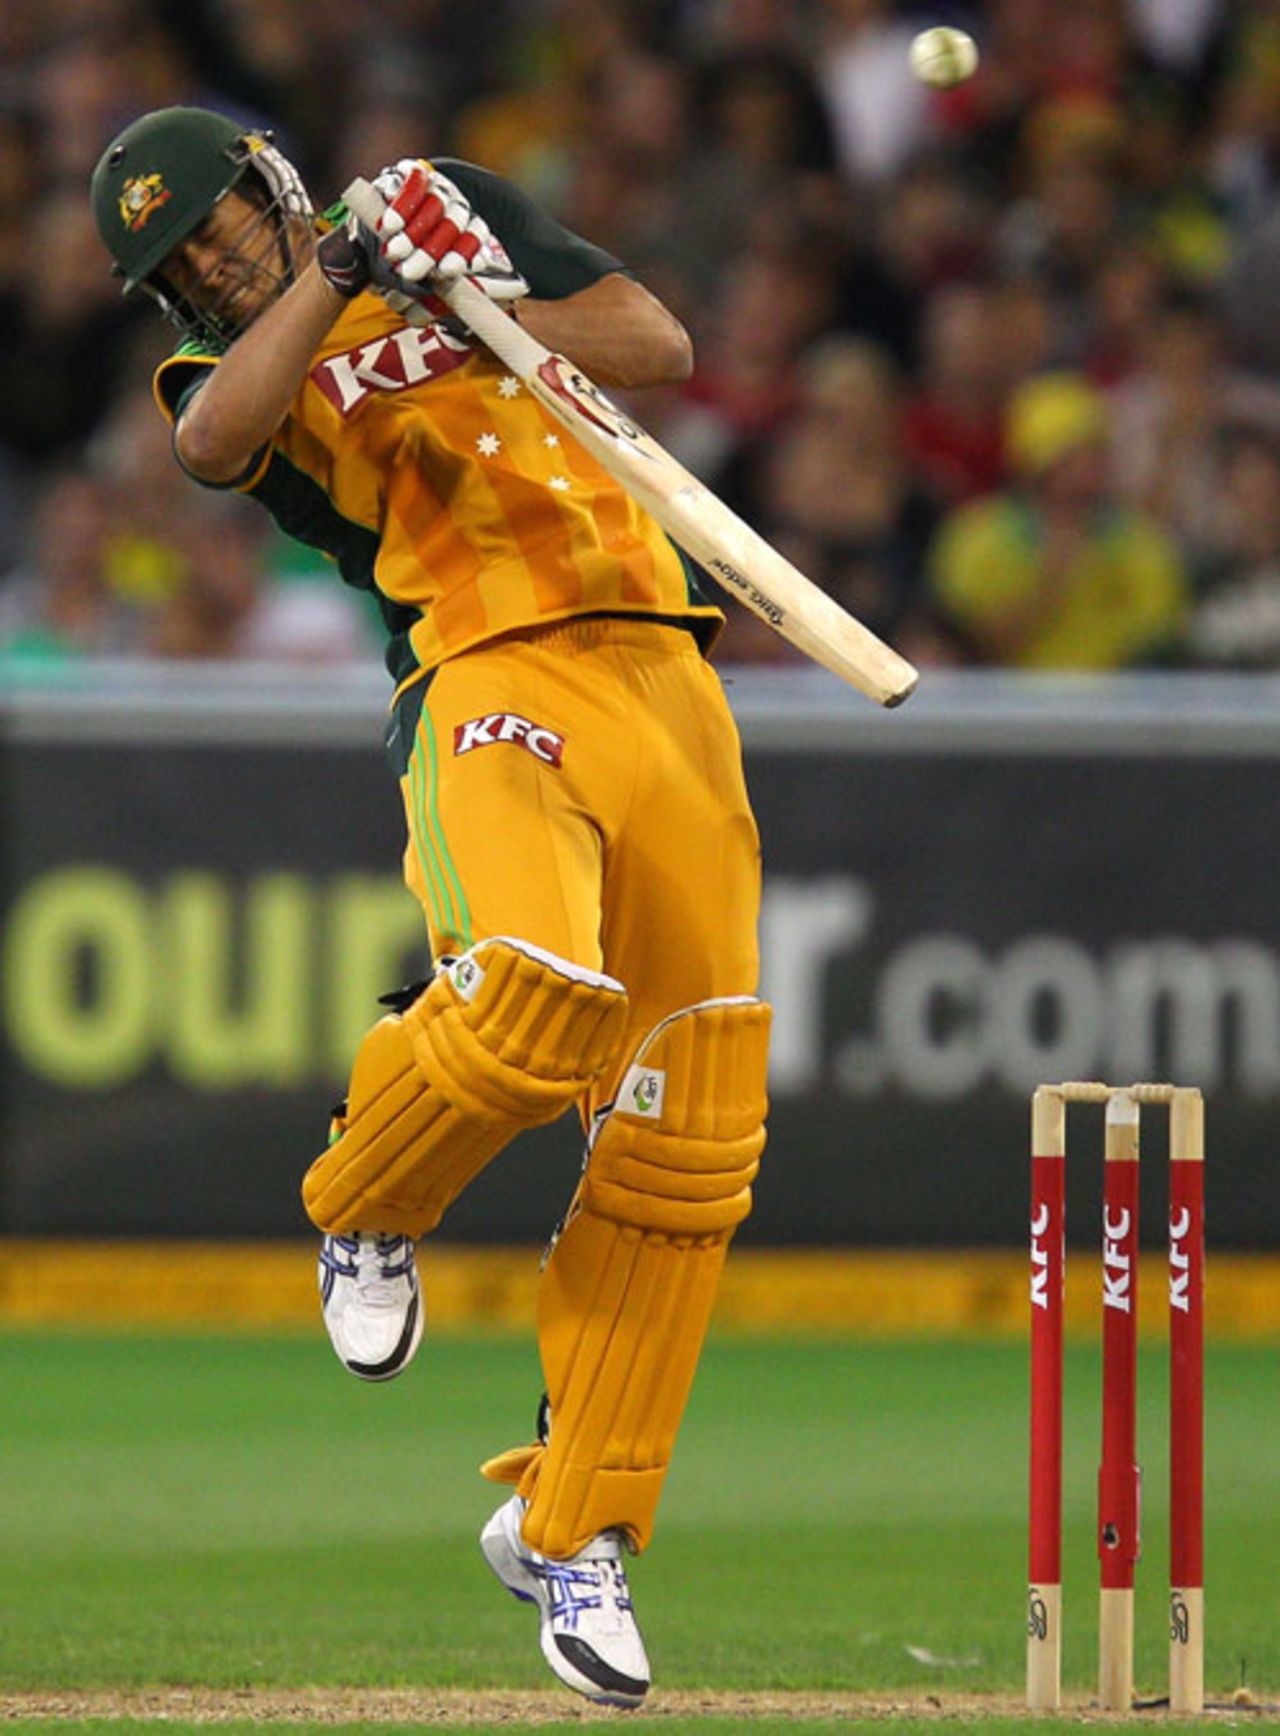 Mitchell Johnson gives Umar Gul his second wicket with an edge behind, Australia v Pakistan, only Twenty20 international, MCG, 5 February, 2010